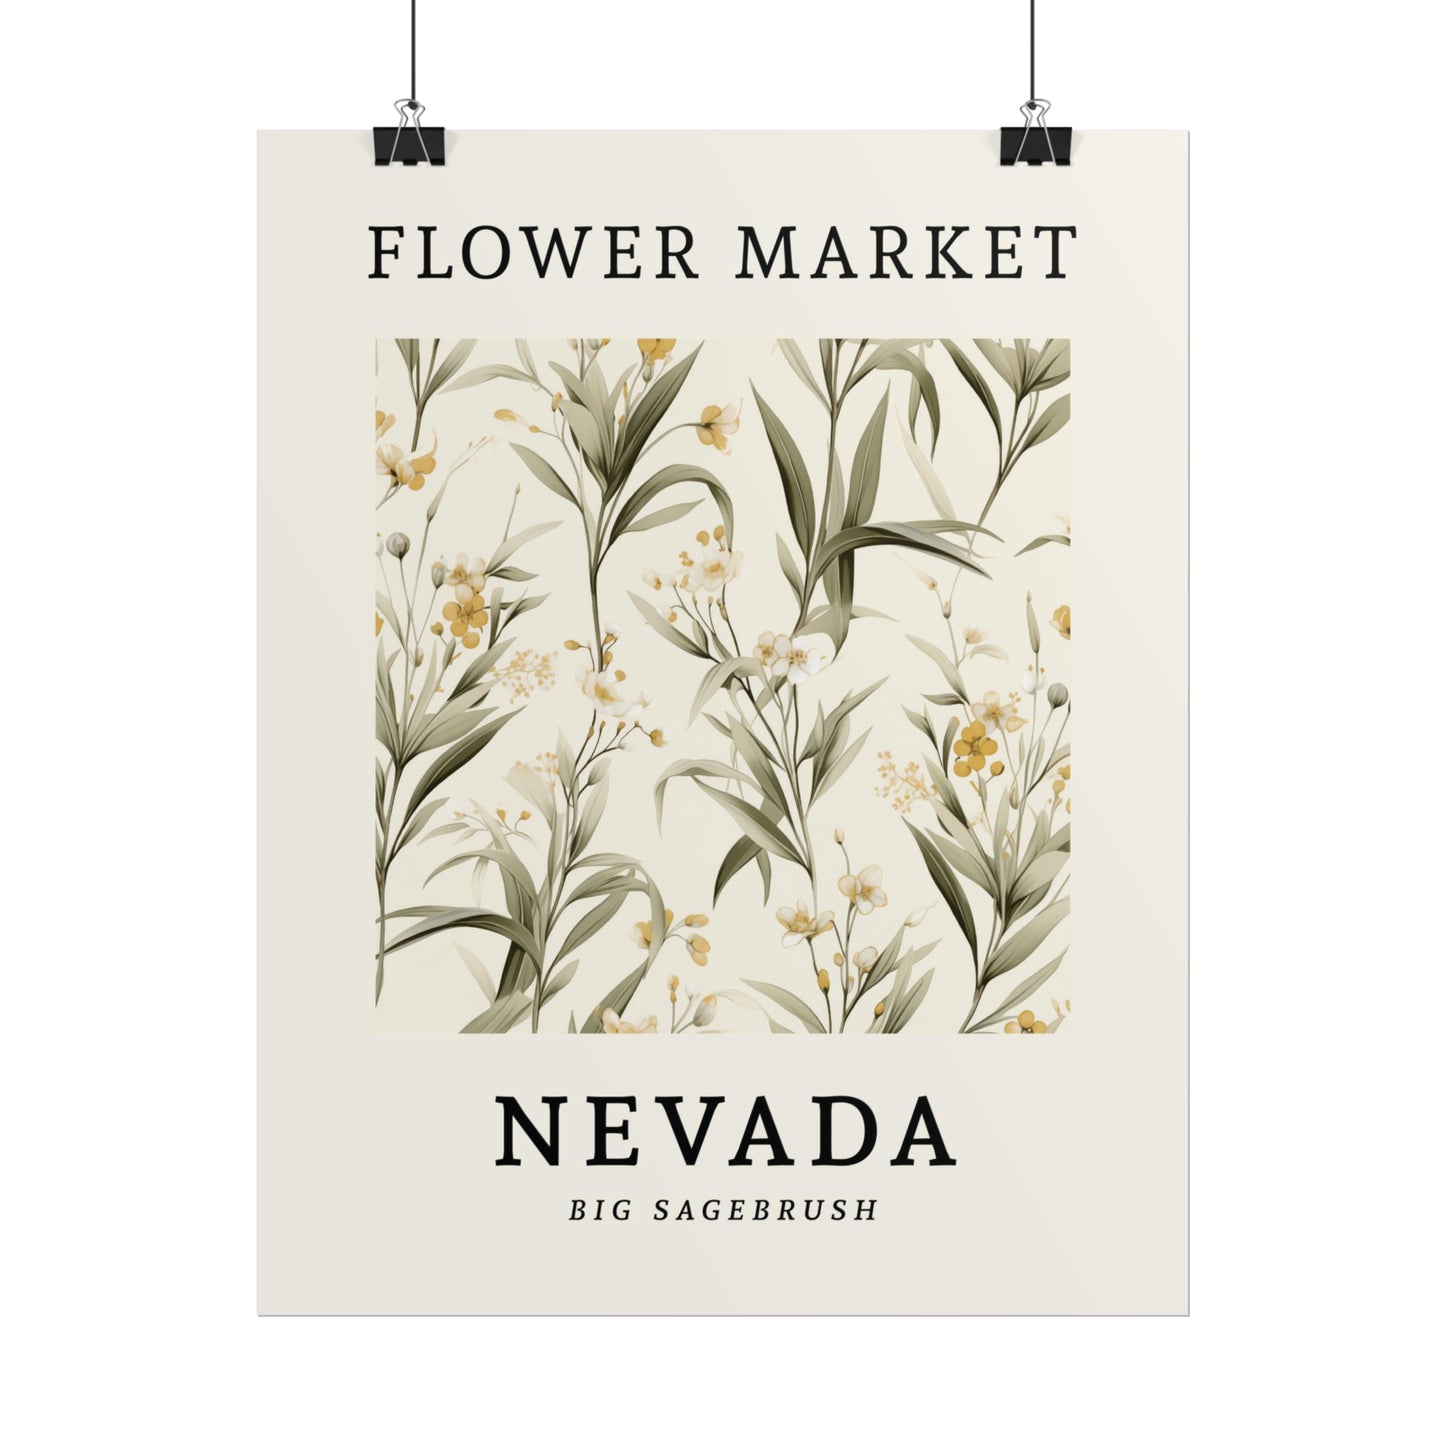 NEVADA FLOWER MARKET Poster Sagebrush Blossoms Print